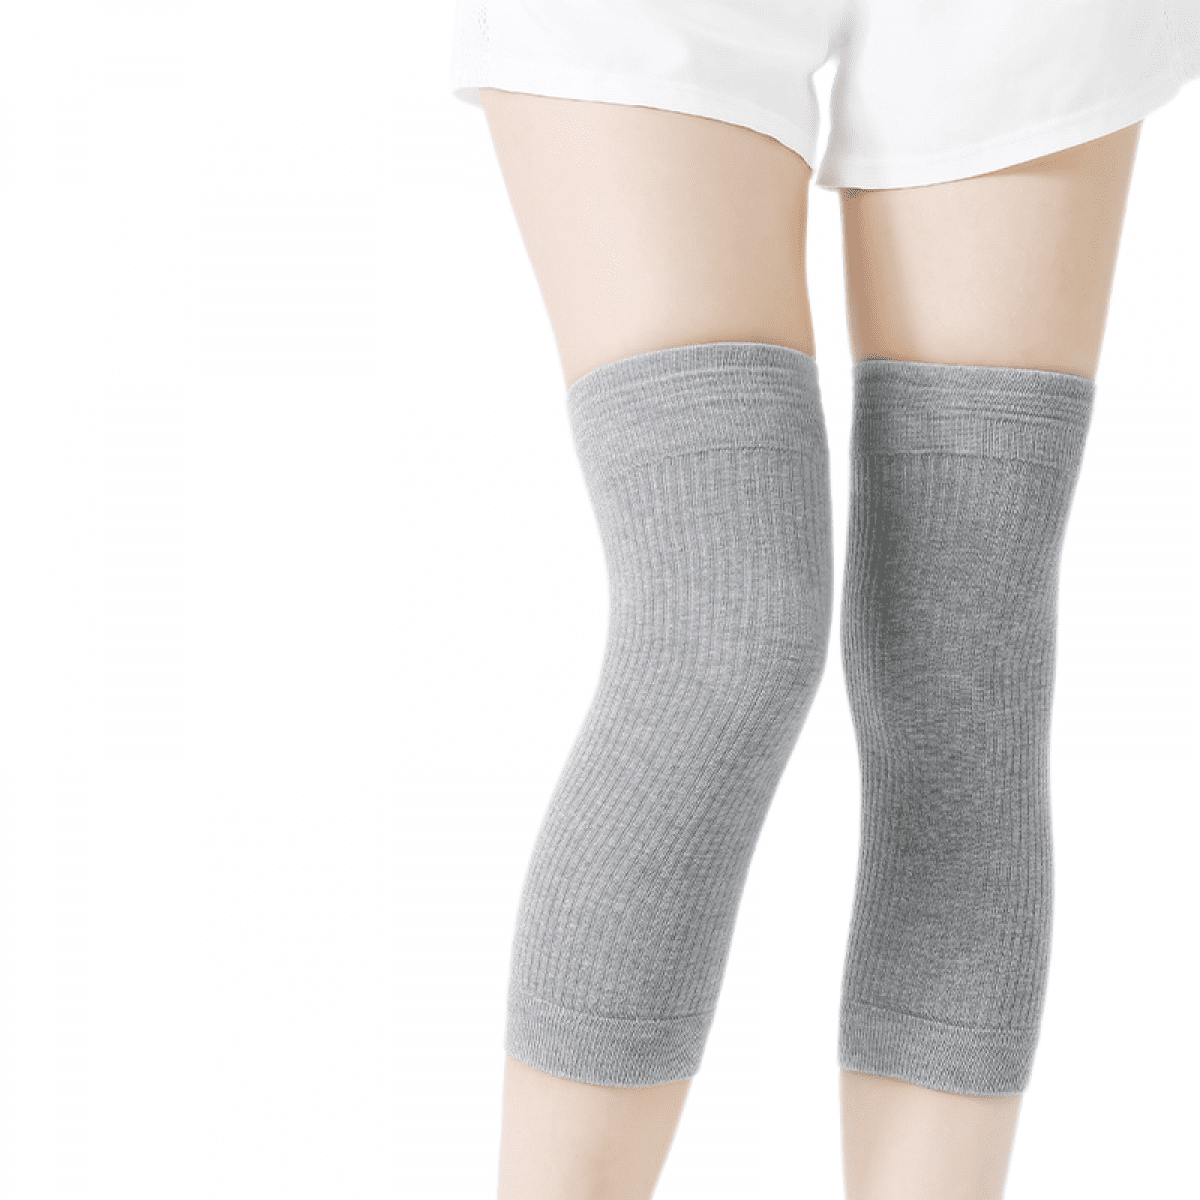 1 Pair Senior Knee Warmers, Elastic Cotton Knee Sleeves - For Women, Men, Circulation  Improvement and Joint Pain Relief(Grey) - Walmart.com